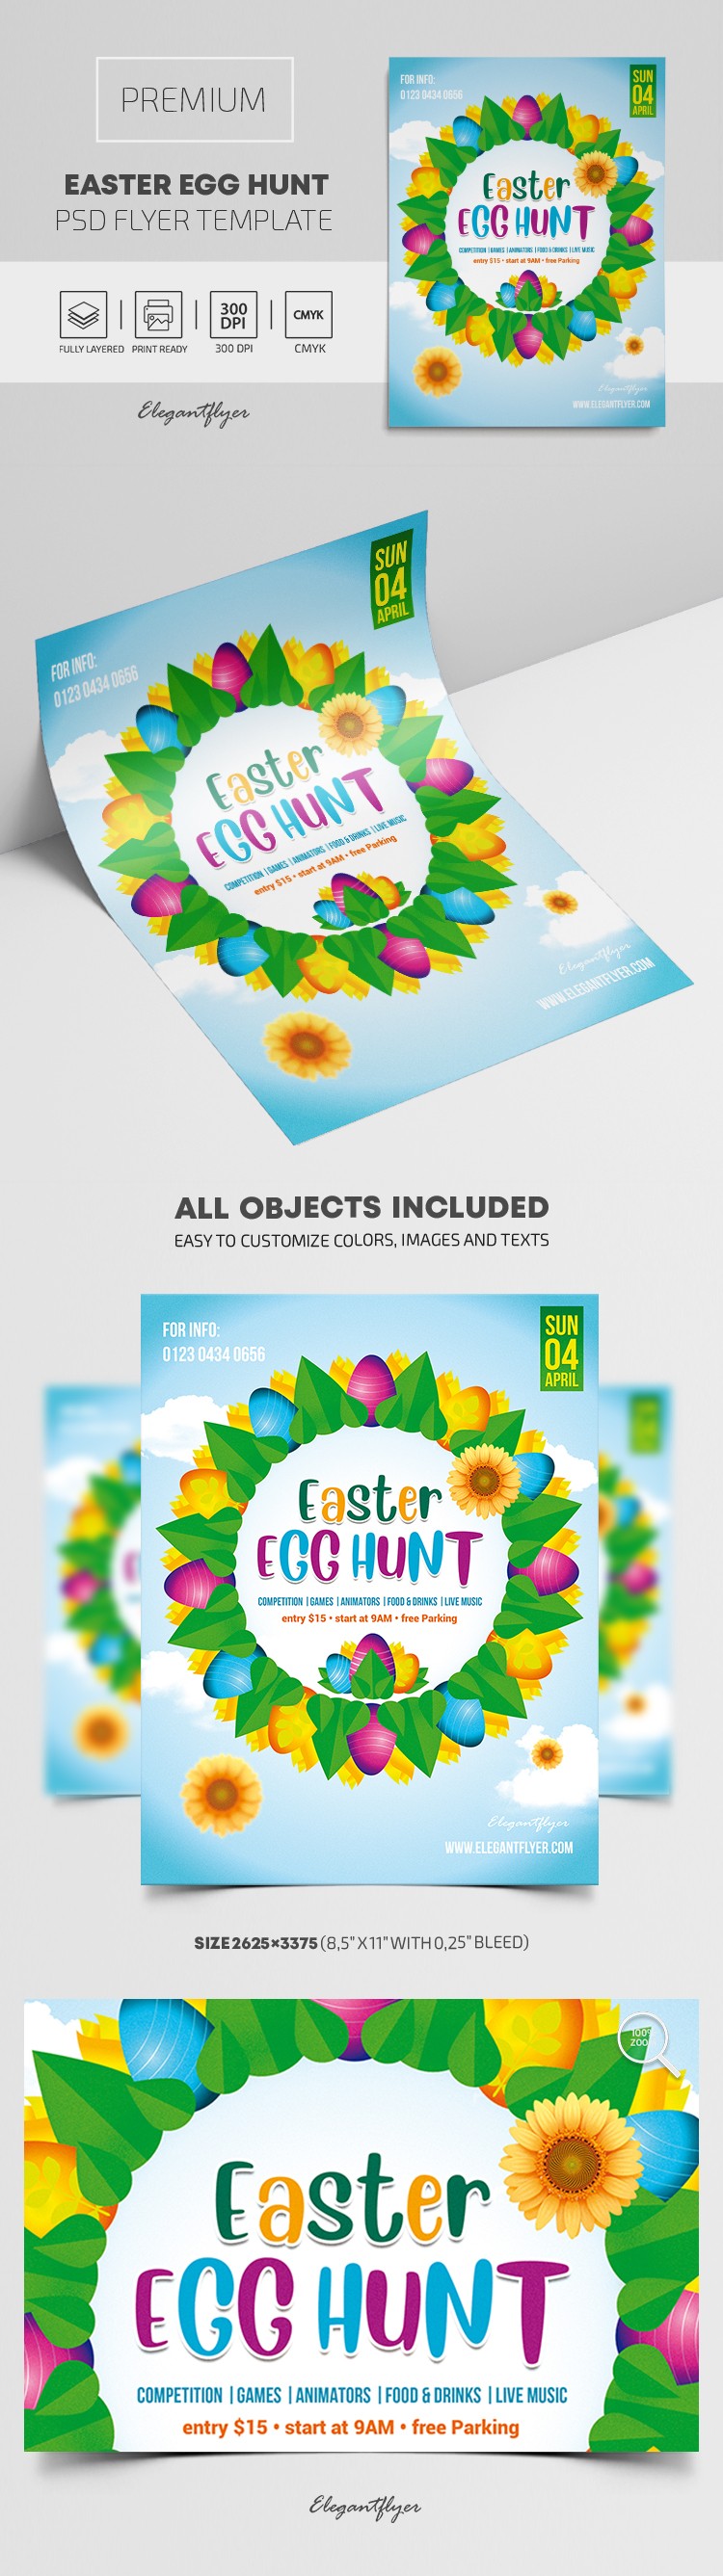 Folleto de búsqueda de huevos de Pascua by ElegantFlyer